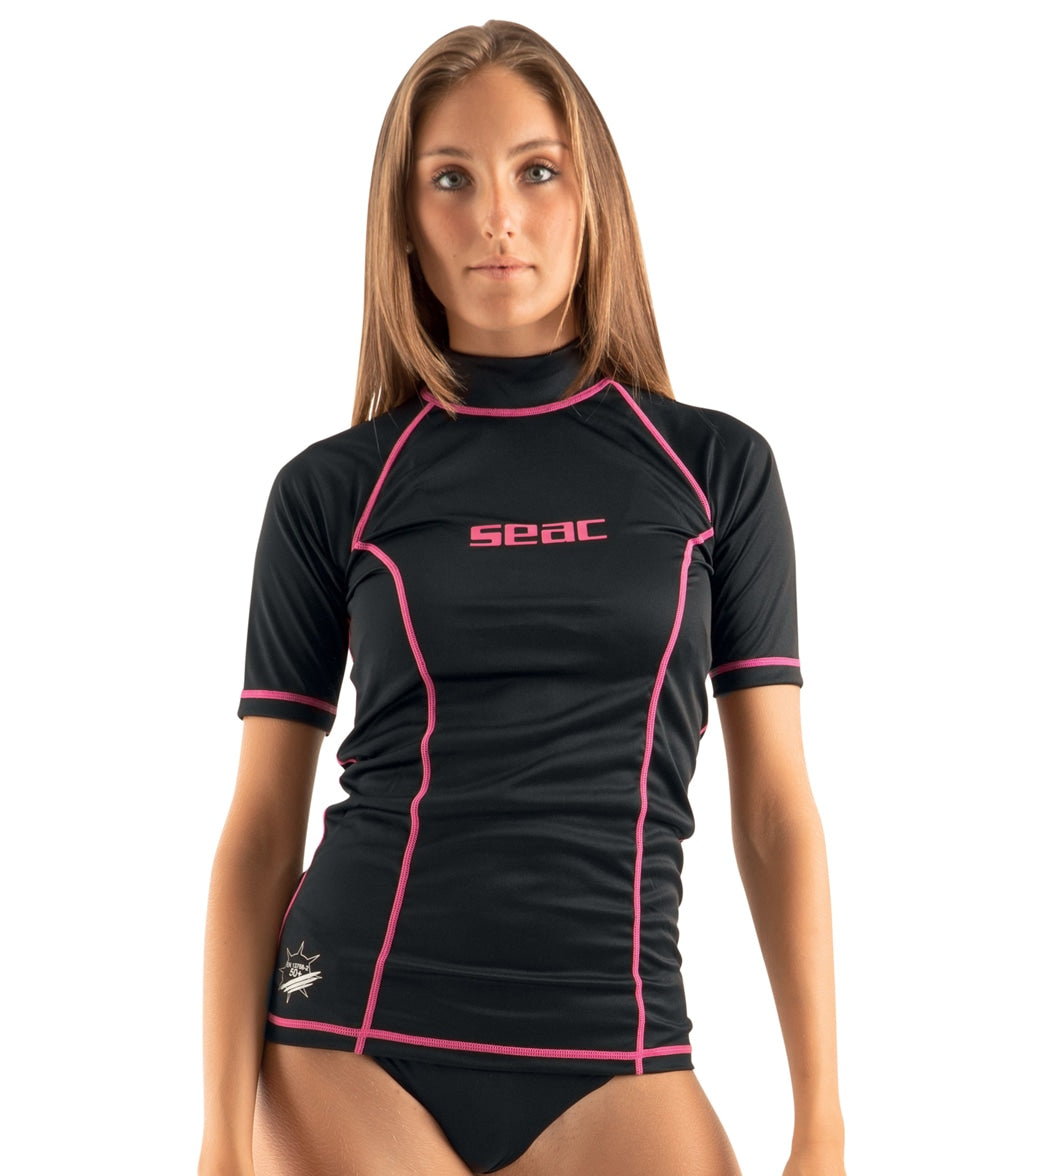 Seac USA Women's T-Sun Long Sleeve Upf 50 Rash Guard at SwimOutlet.com